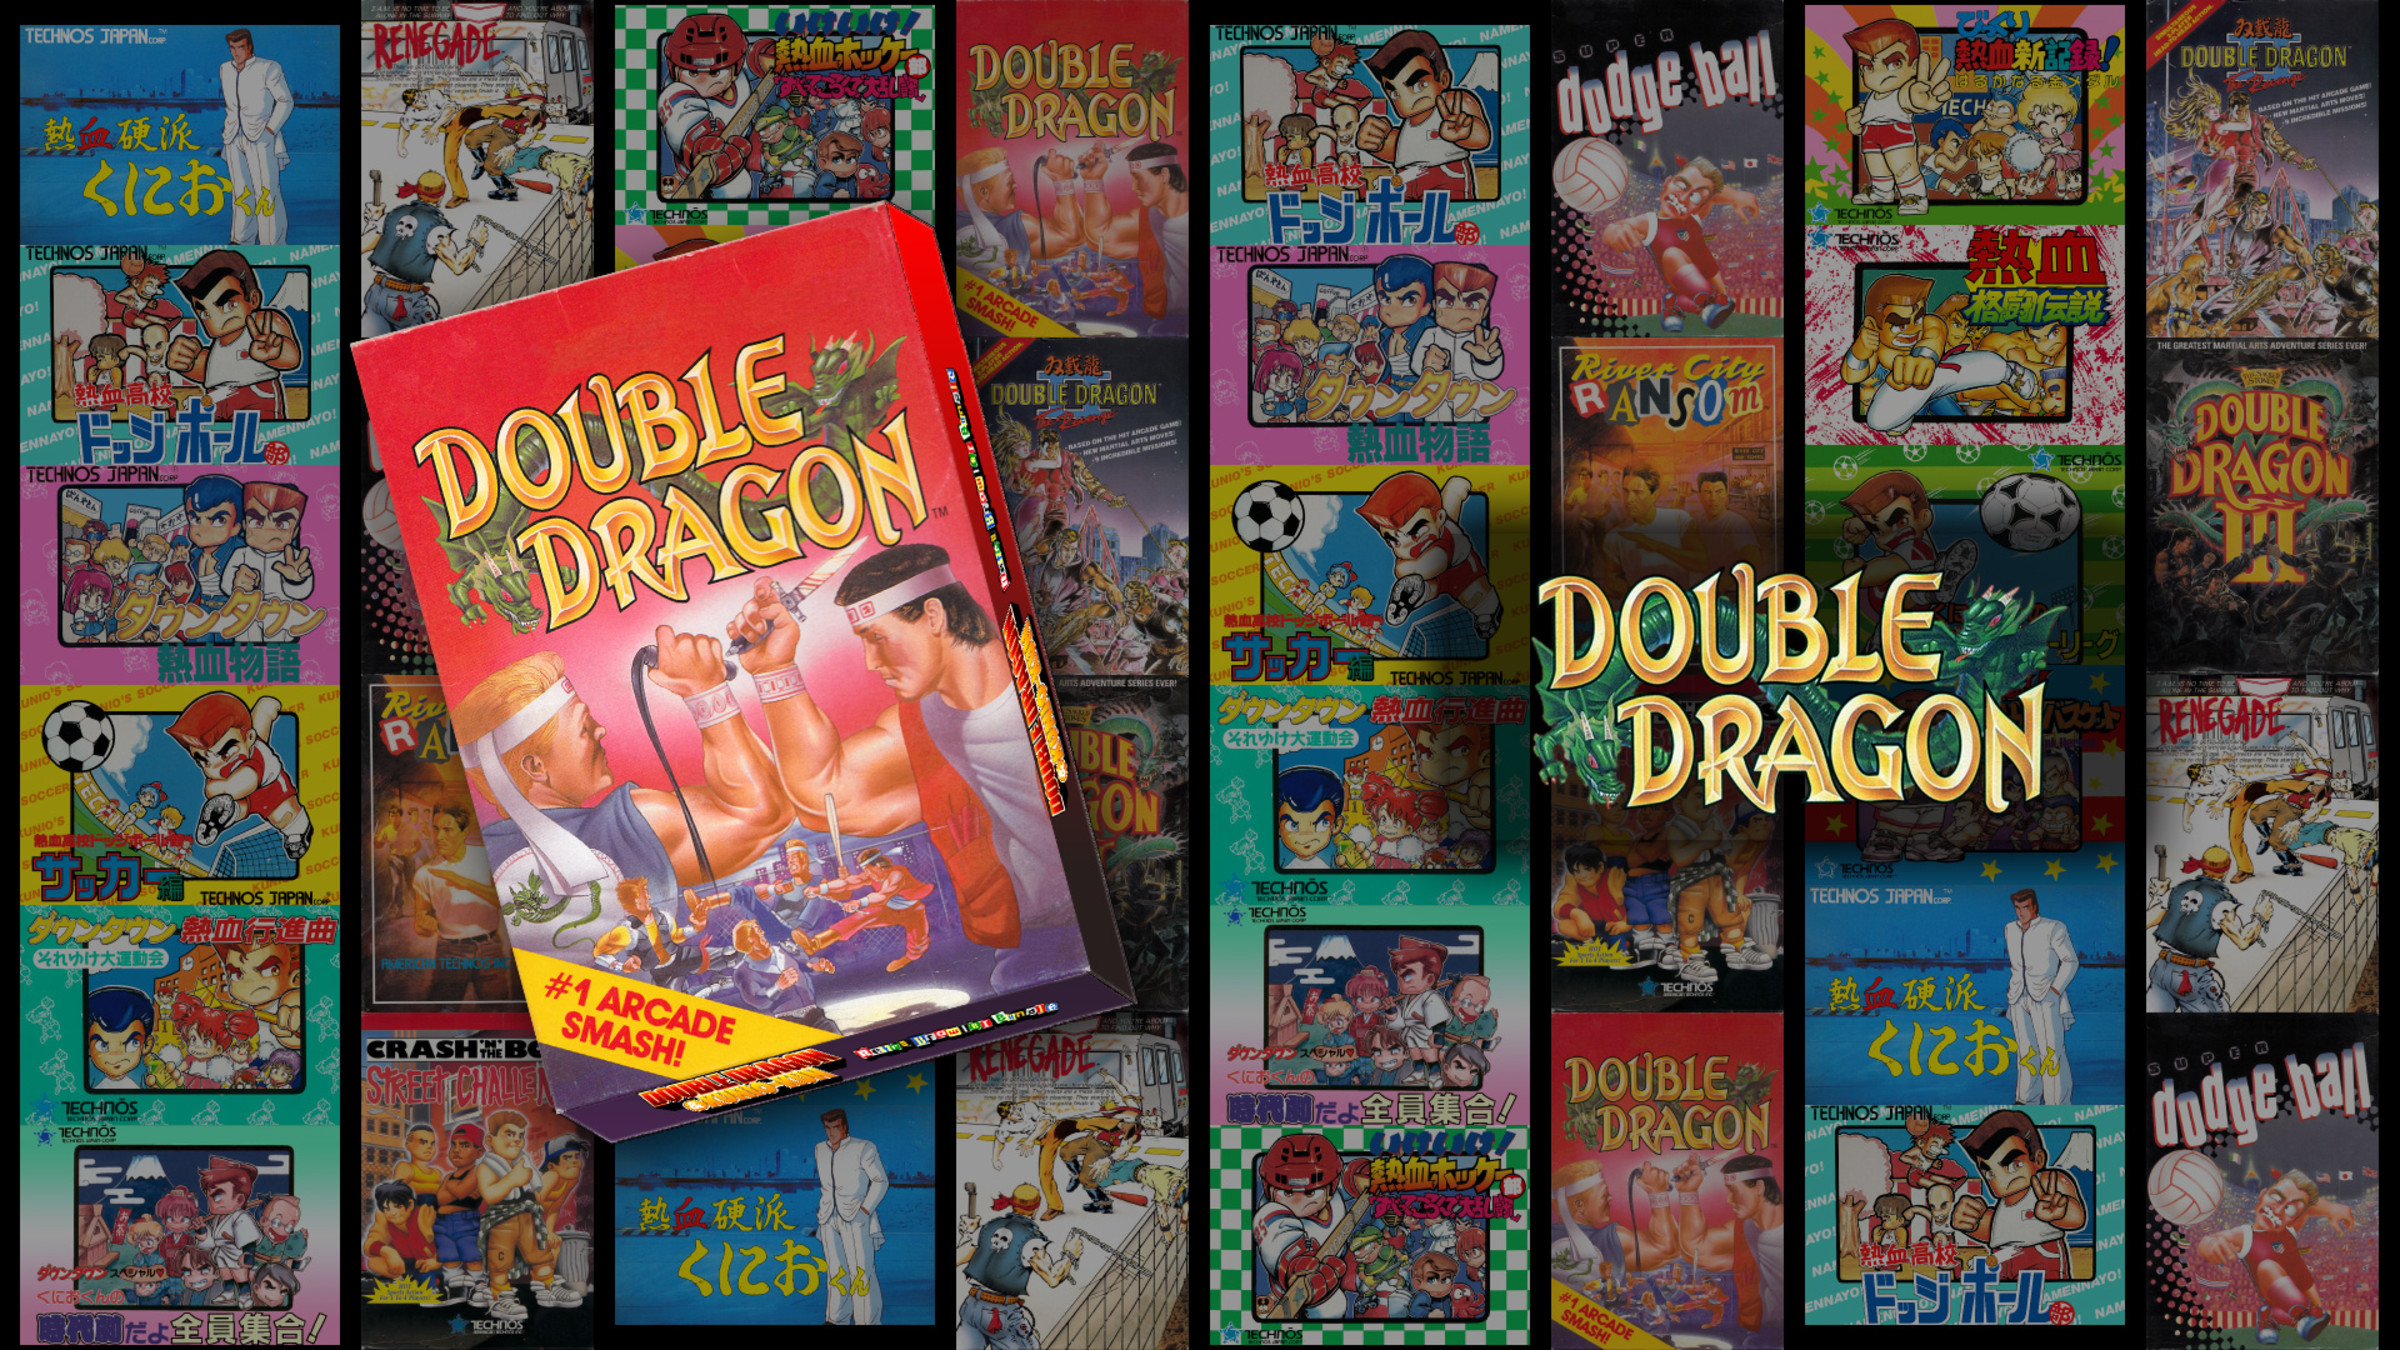 Double Dragon IV - Nintendo Switch Version Trailer 